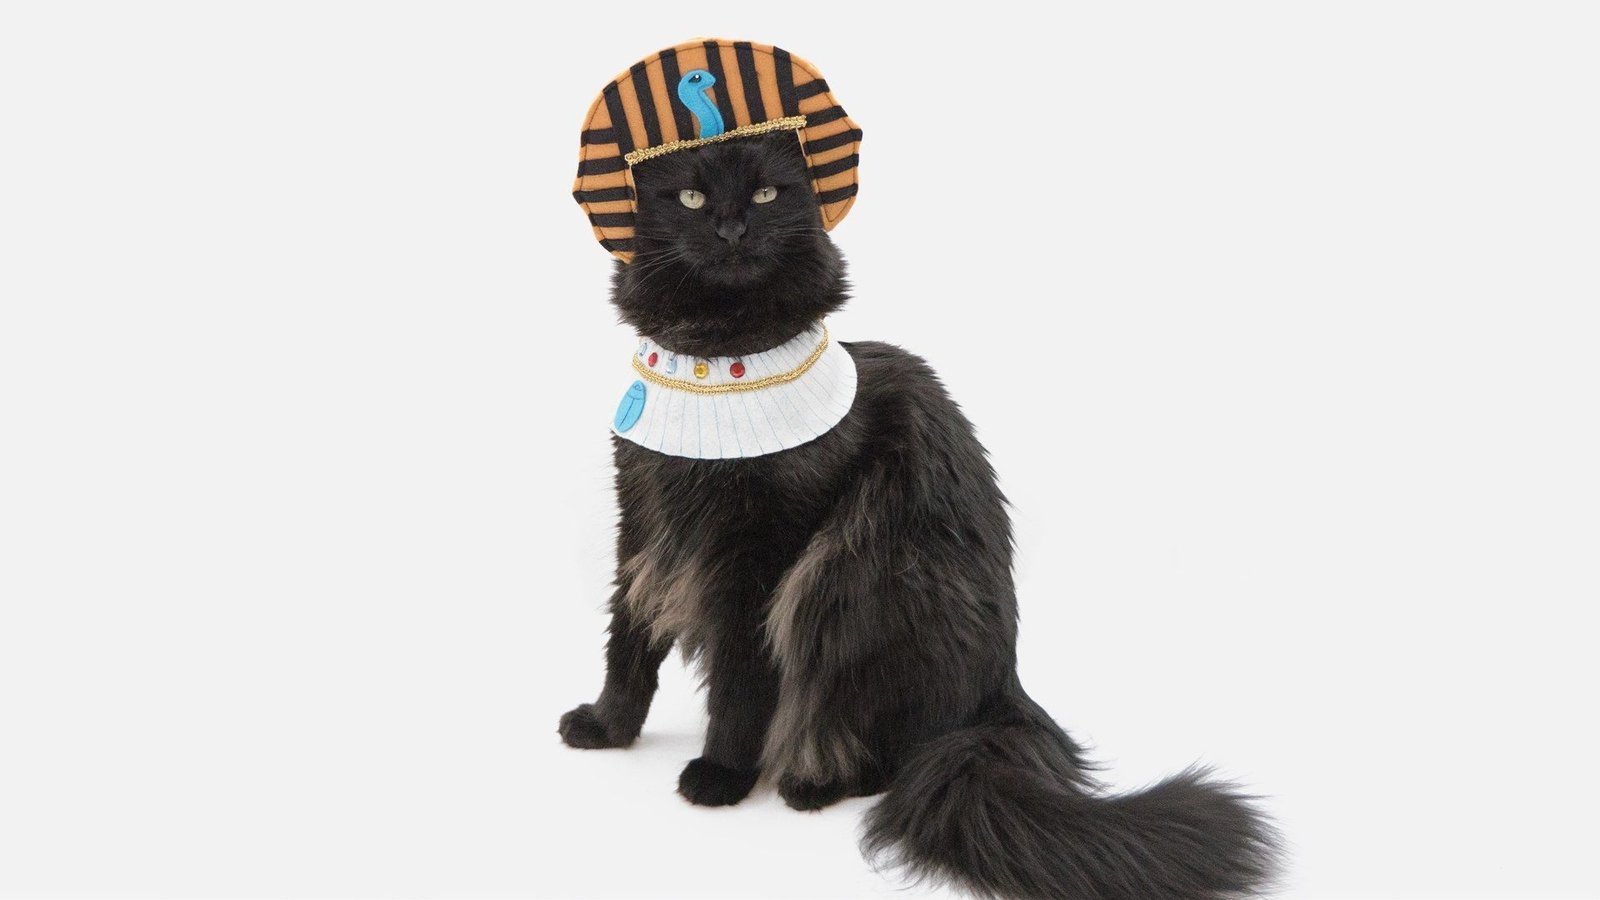 Egyptian Cat costume halloween